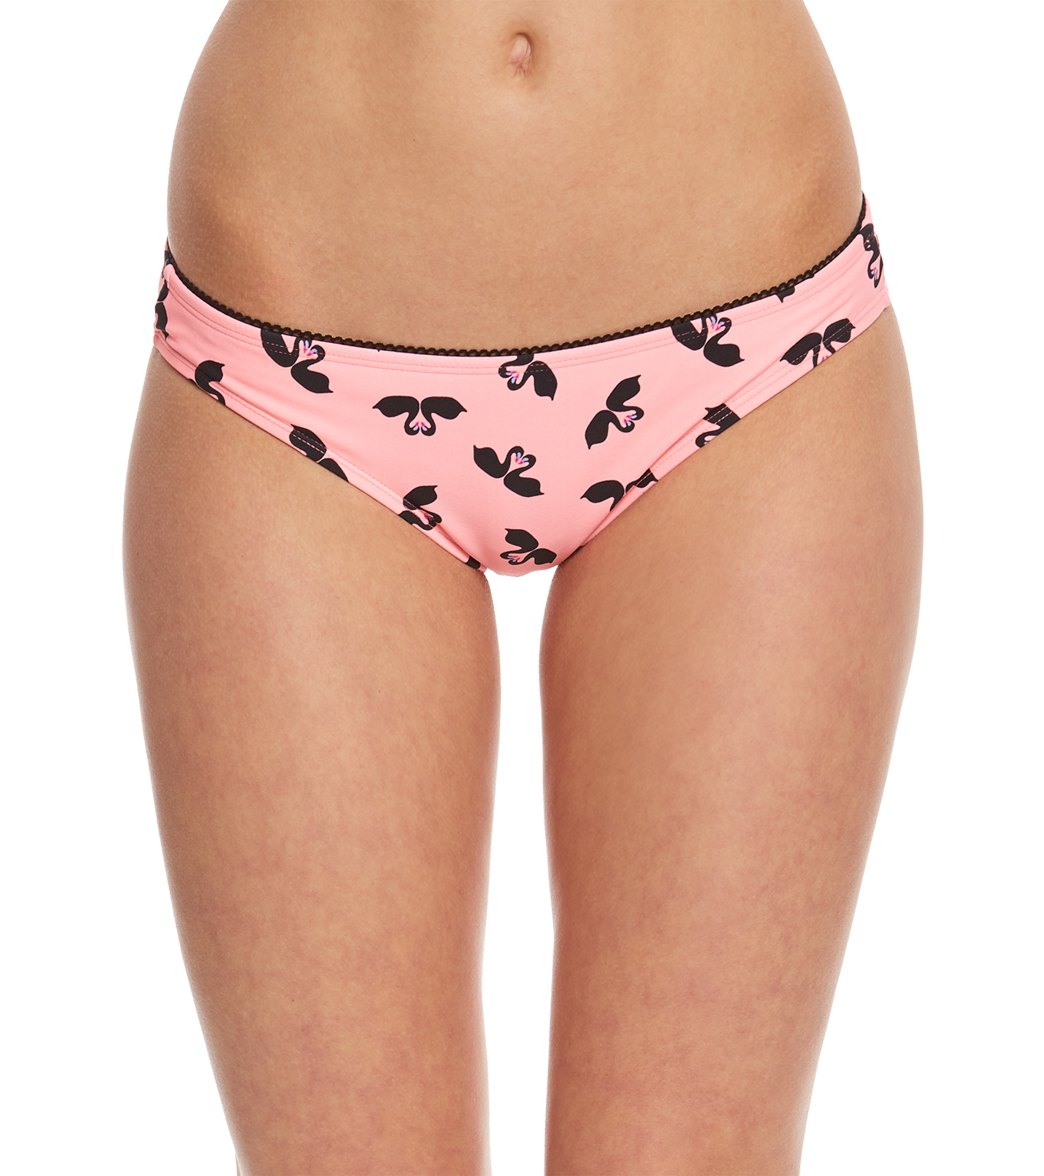 Betsey Johnson Swooning Swans Hipster Bikini Bottom - Black/Pink Small - Swimoutlet.com